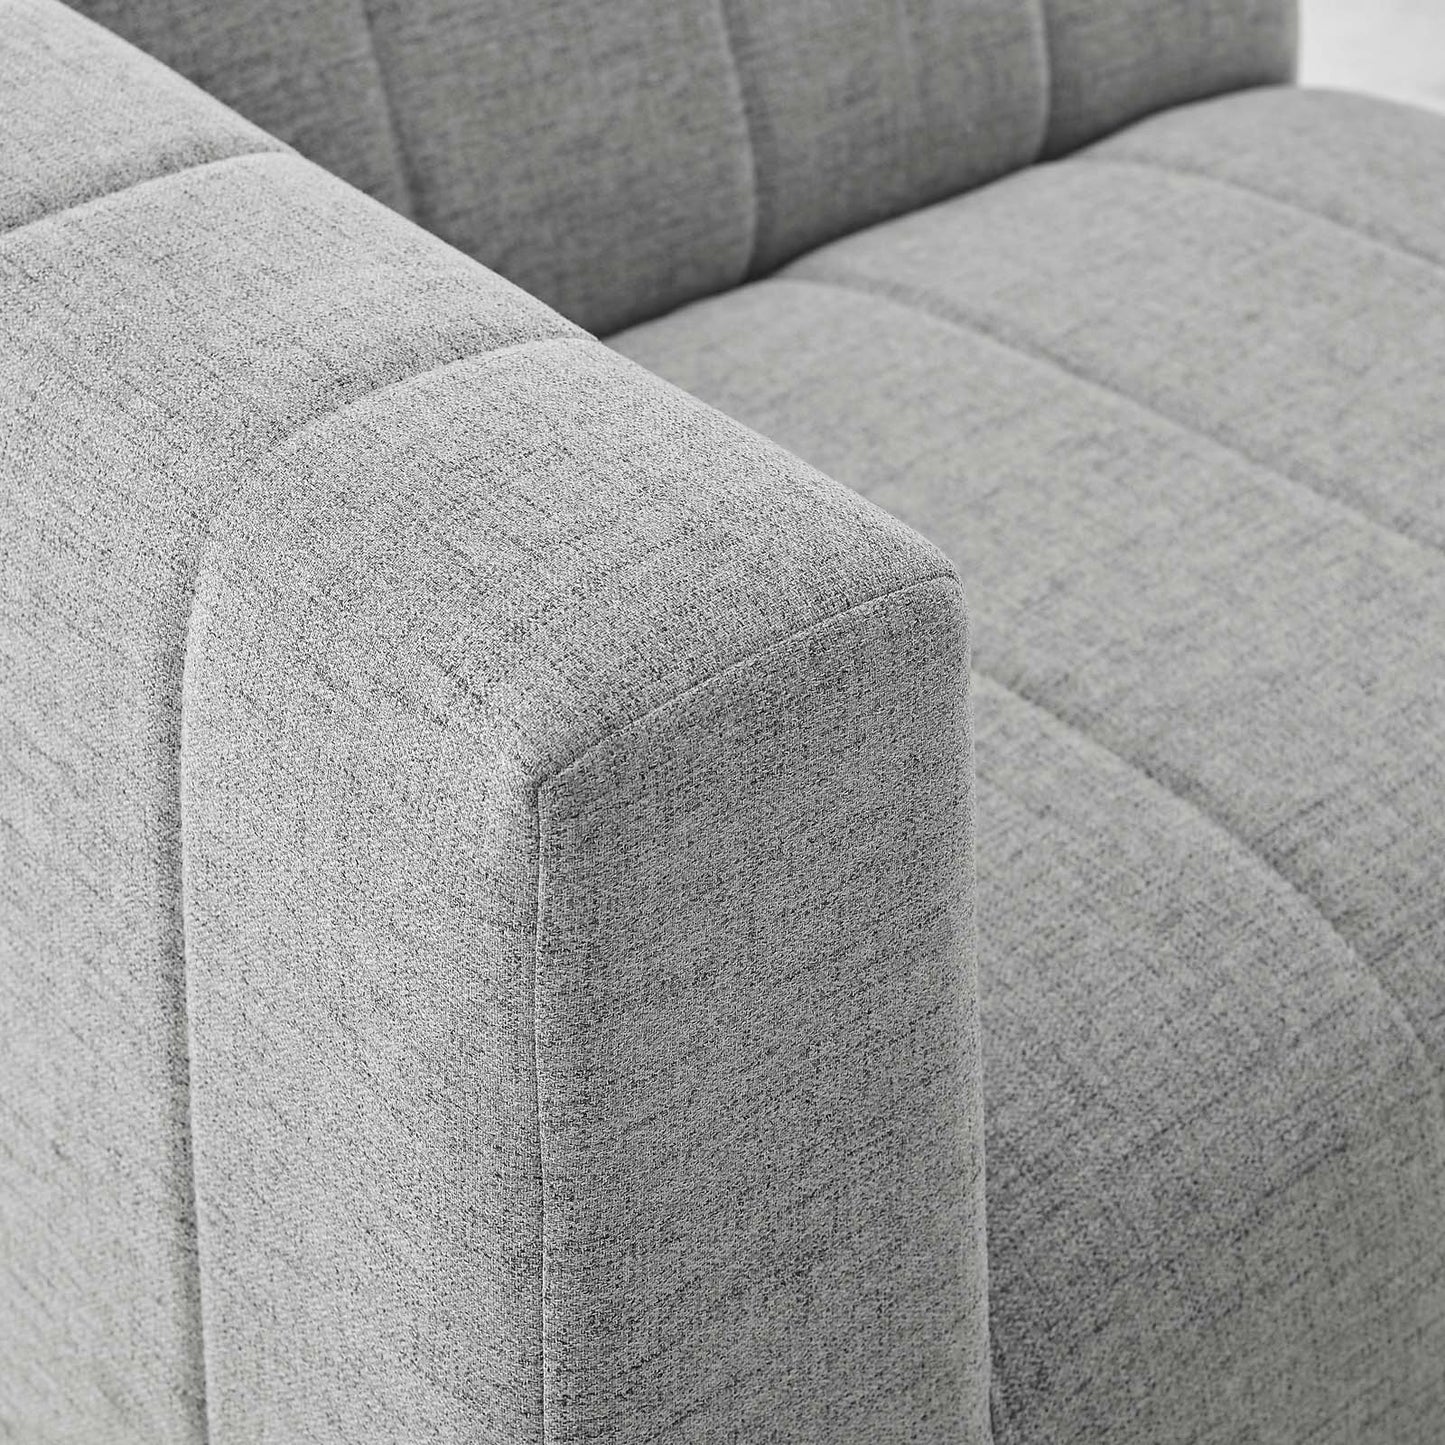 Bartlett Upholstered Fabric Left-Arm Chair Light Gray EEI-4396-LGR